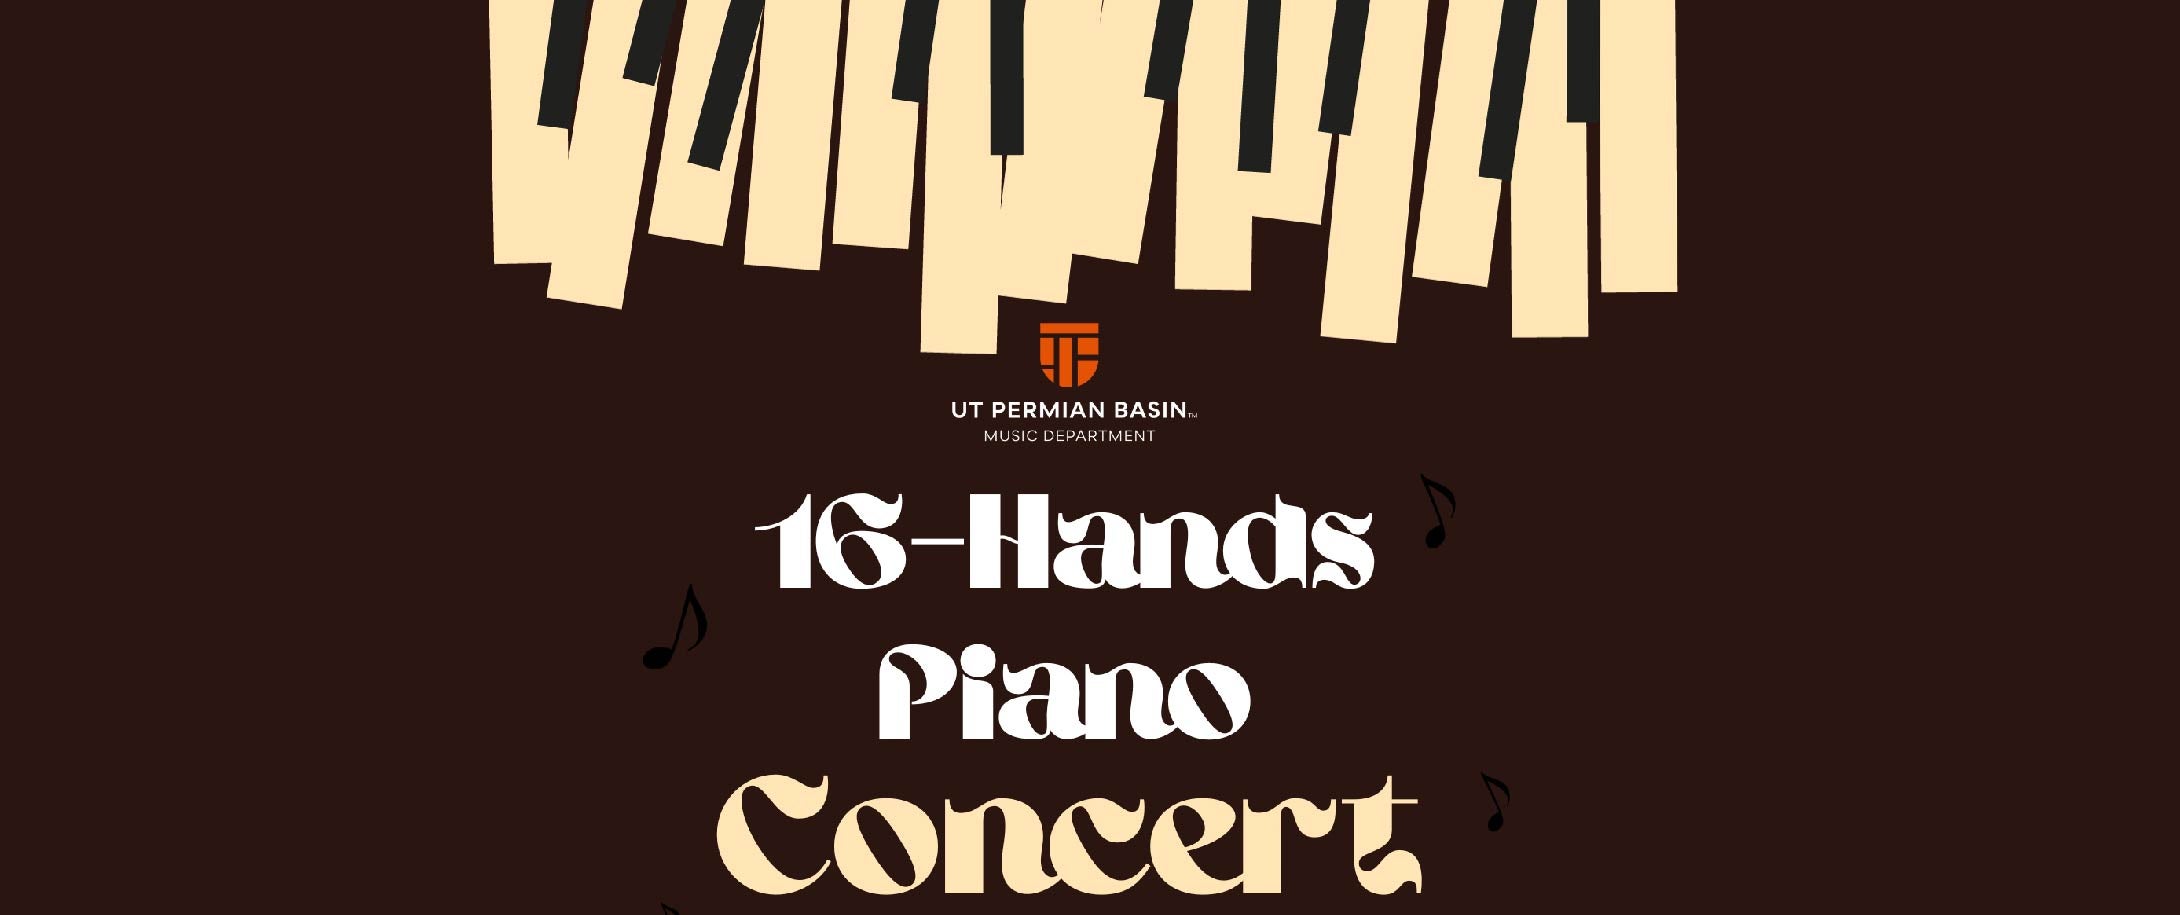 Permian Basin's 16-Hands Piano Concert Wagner Noel on October 21, 2023 in Odessa, TX